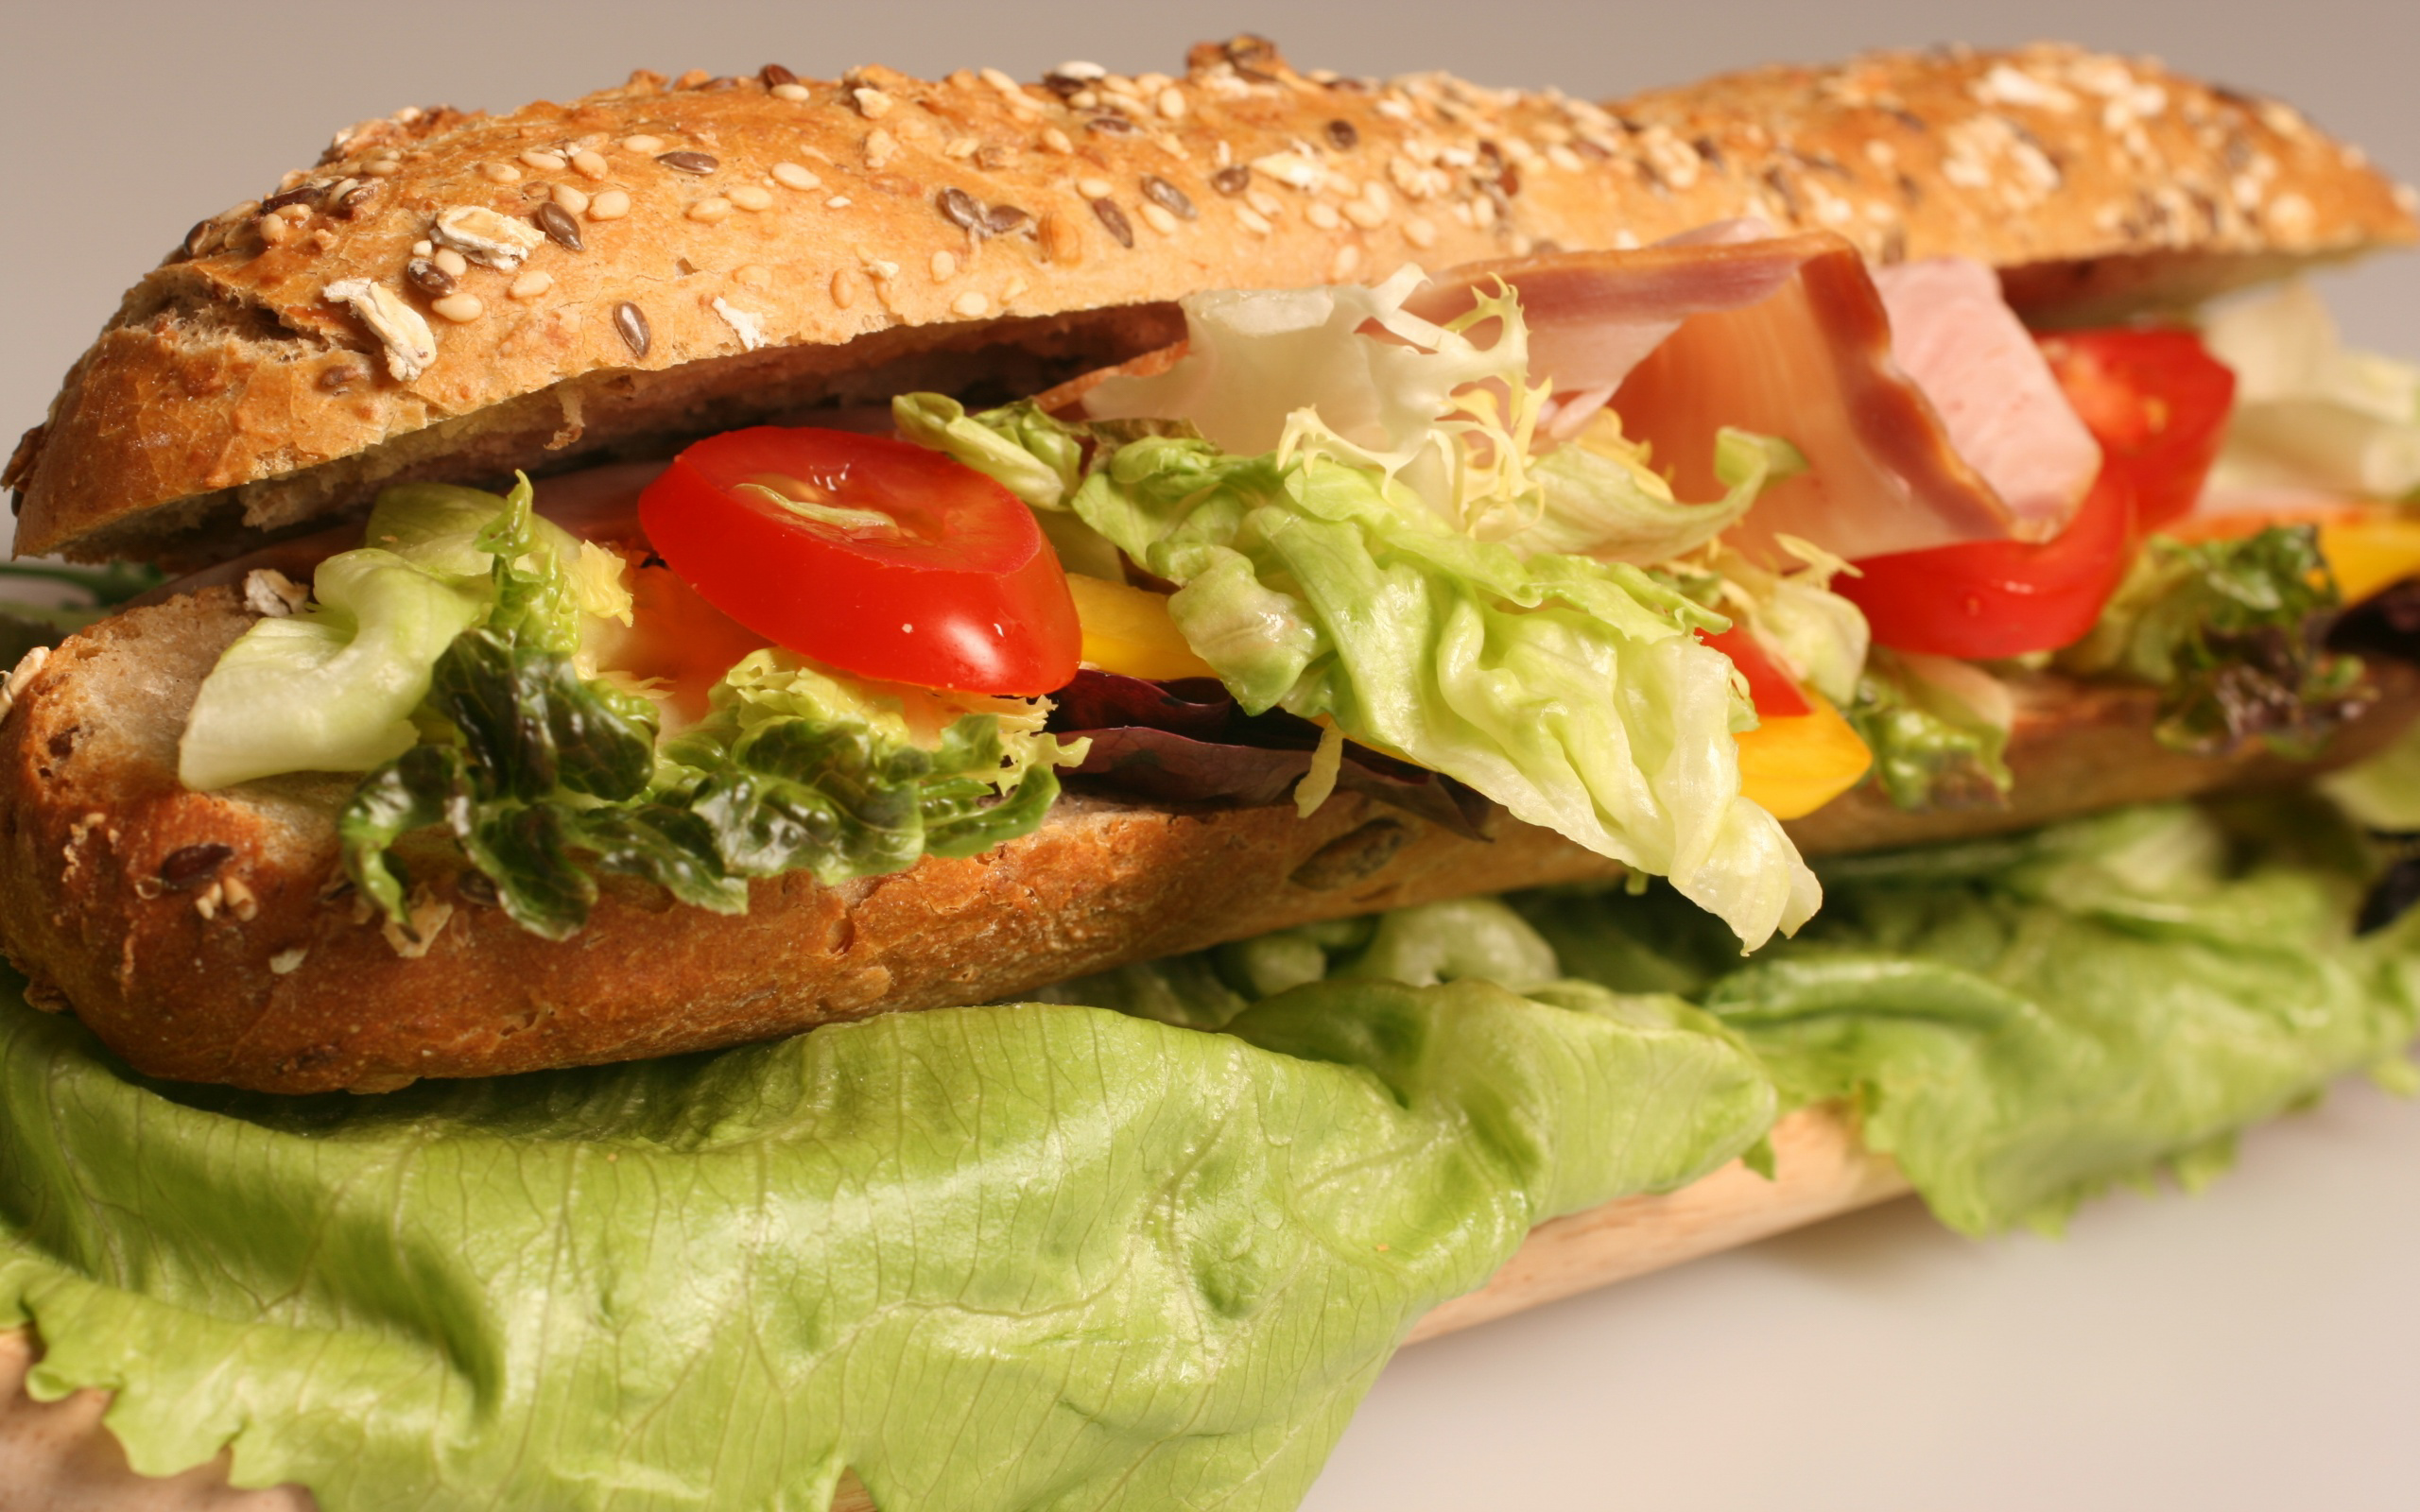 720146 descargar imagen alimento, sándwich, panecillo, lechuga, almuerzo, ensalada, tomate: fondos de pantalla y protectores de pantalla gratis